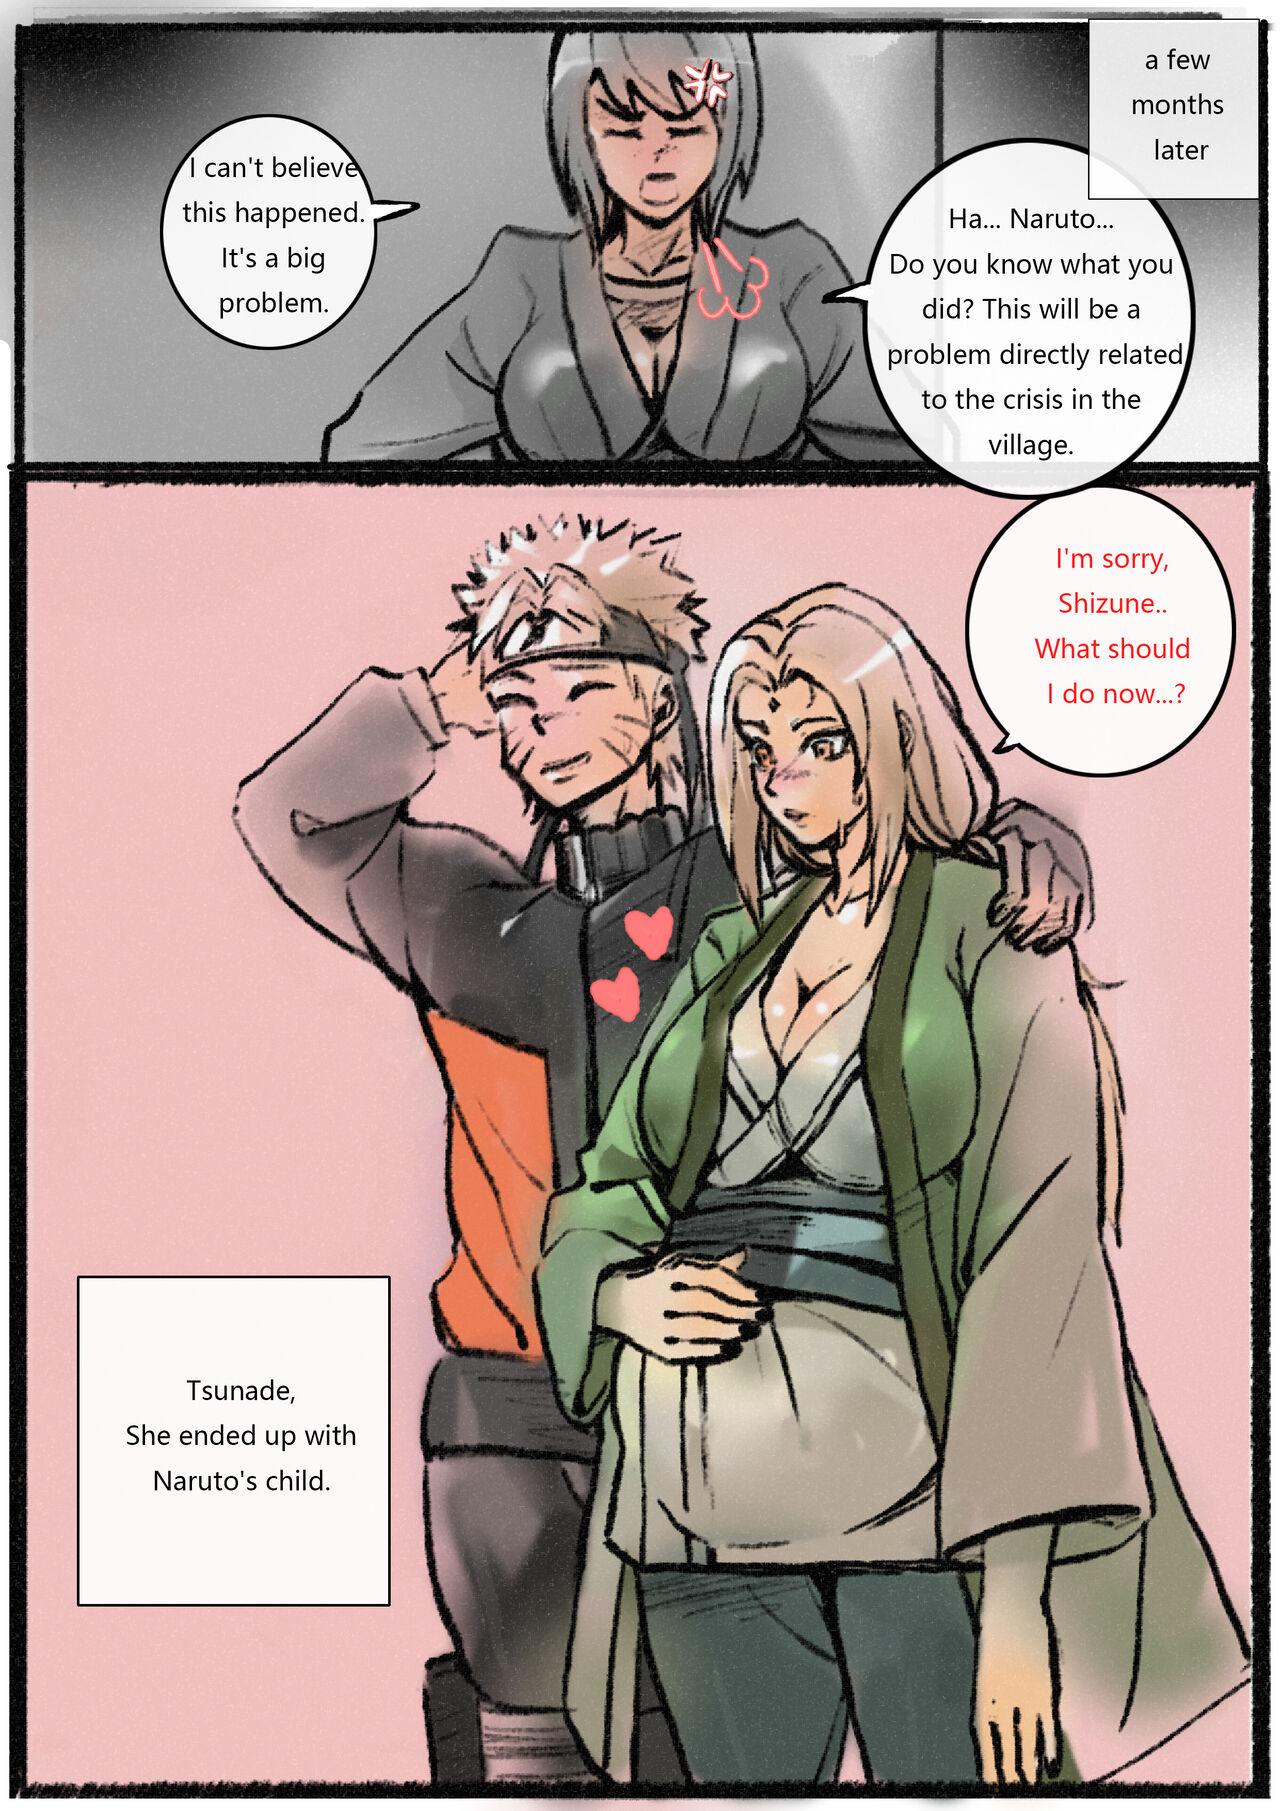 Naruto Wants Tsunade to Help Him Graduate From His Virginity 13